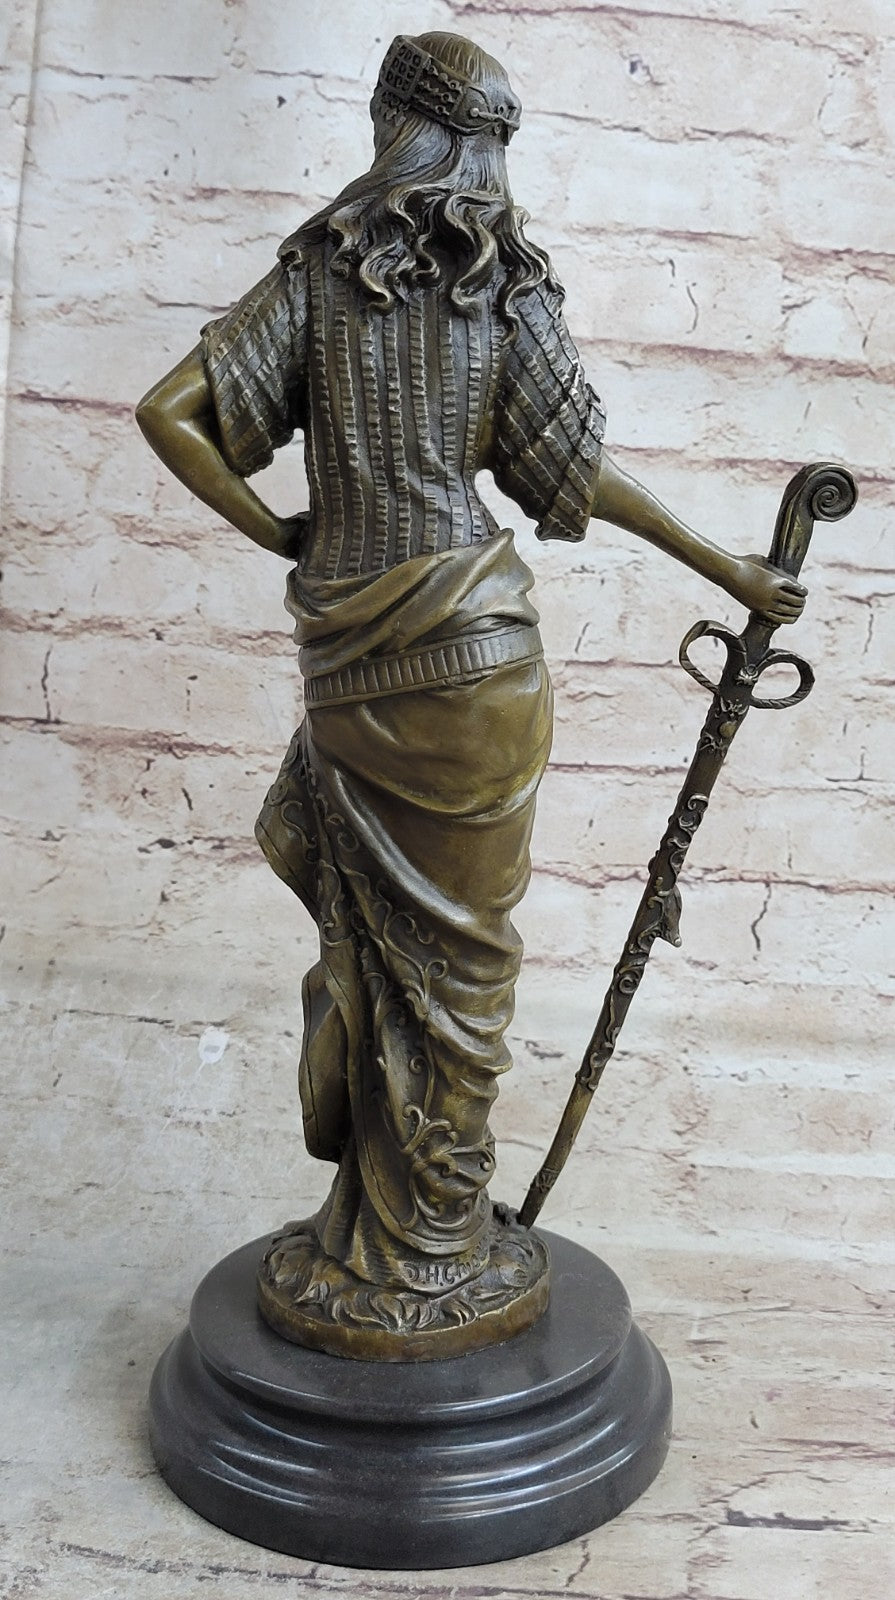 Collectible Hand Crafted Islamic Princess Hot Cast Bronze Sculpture Figurine Art